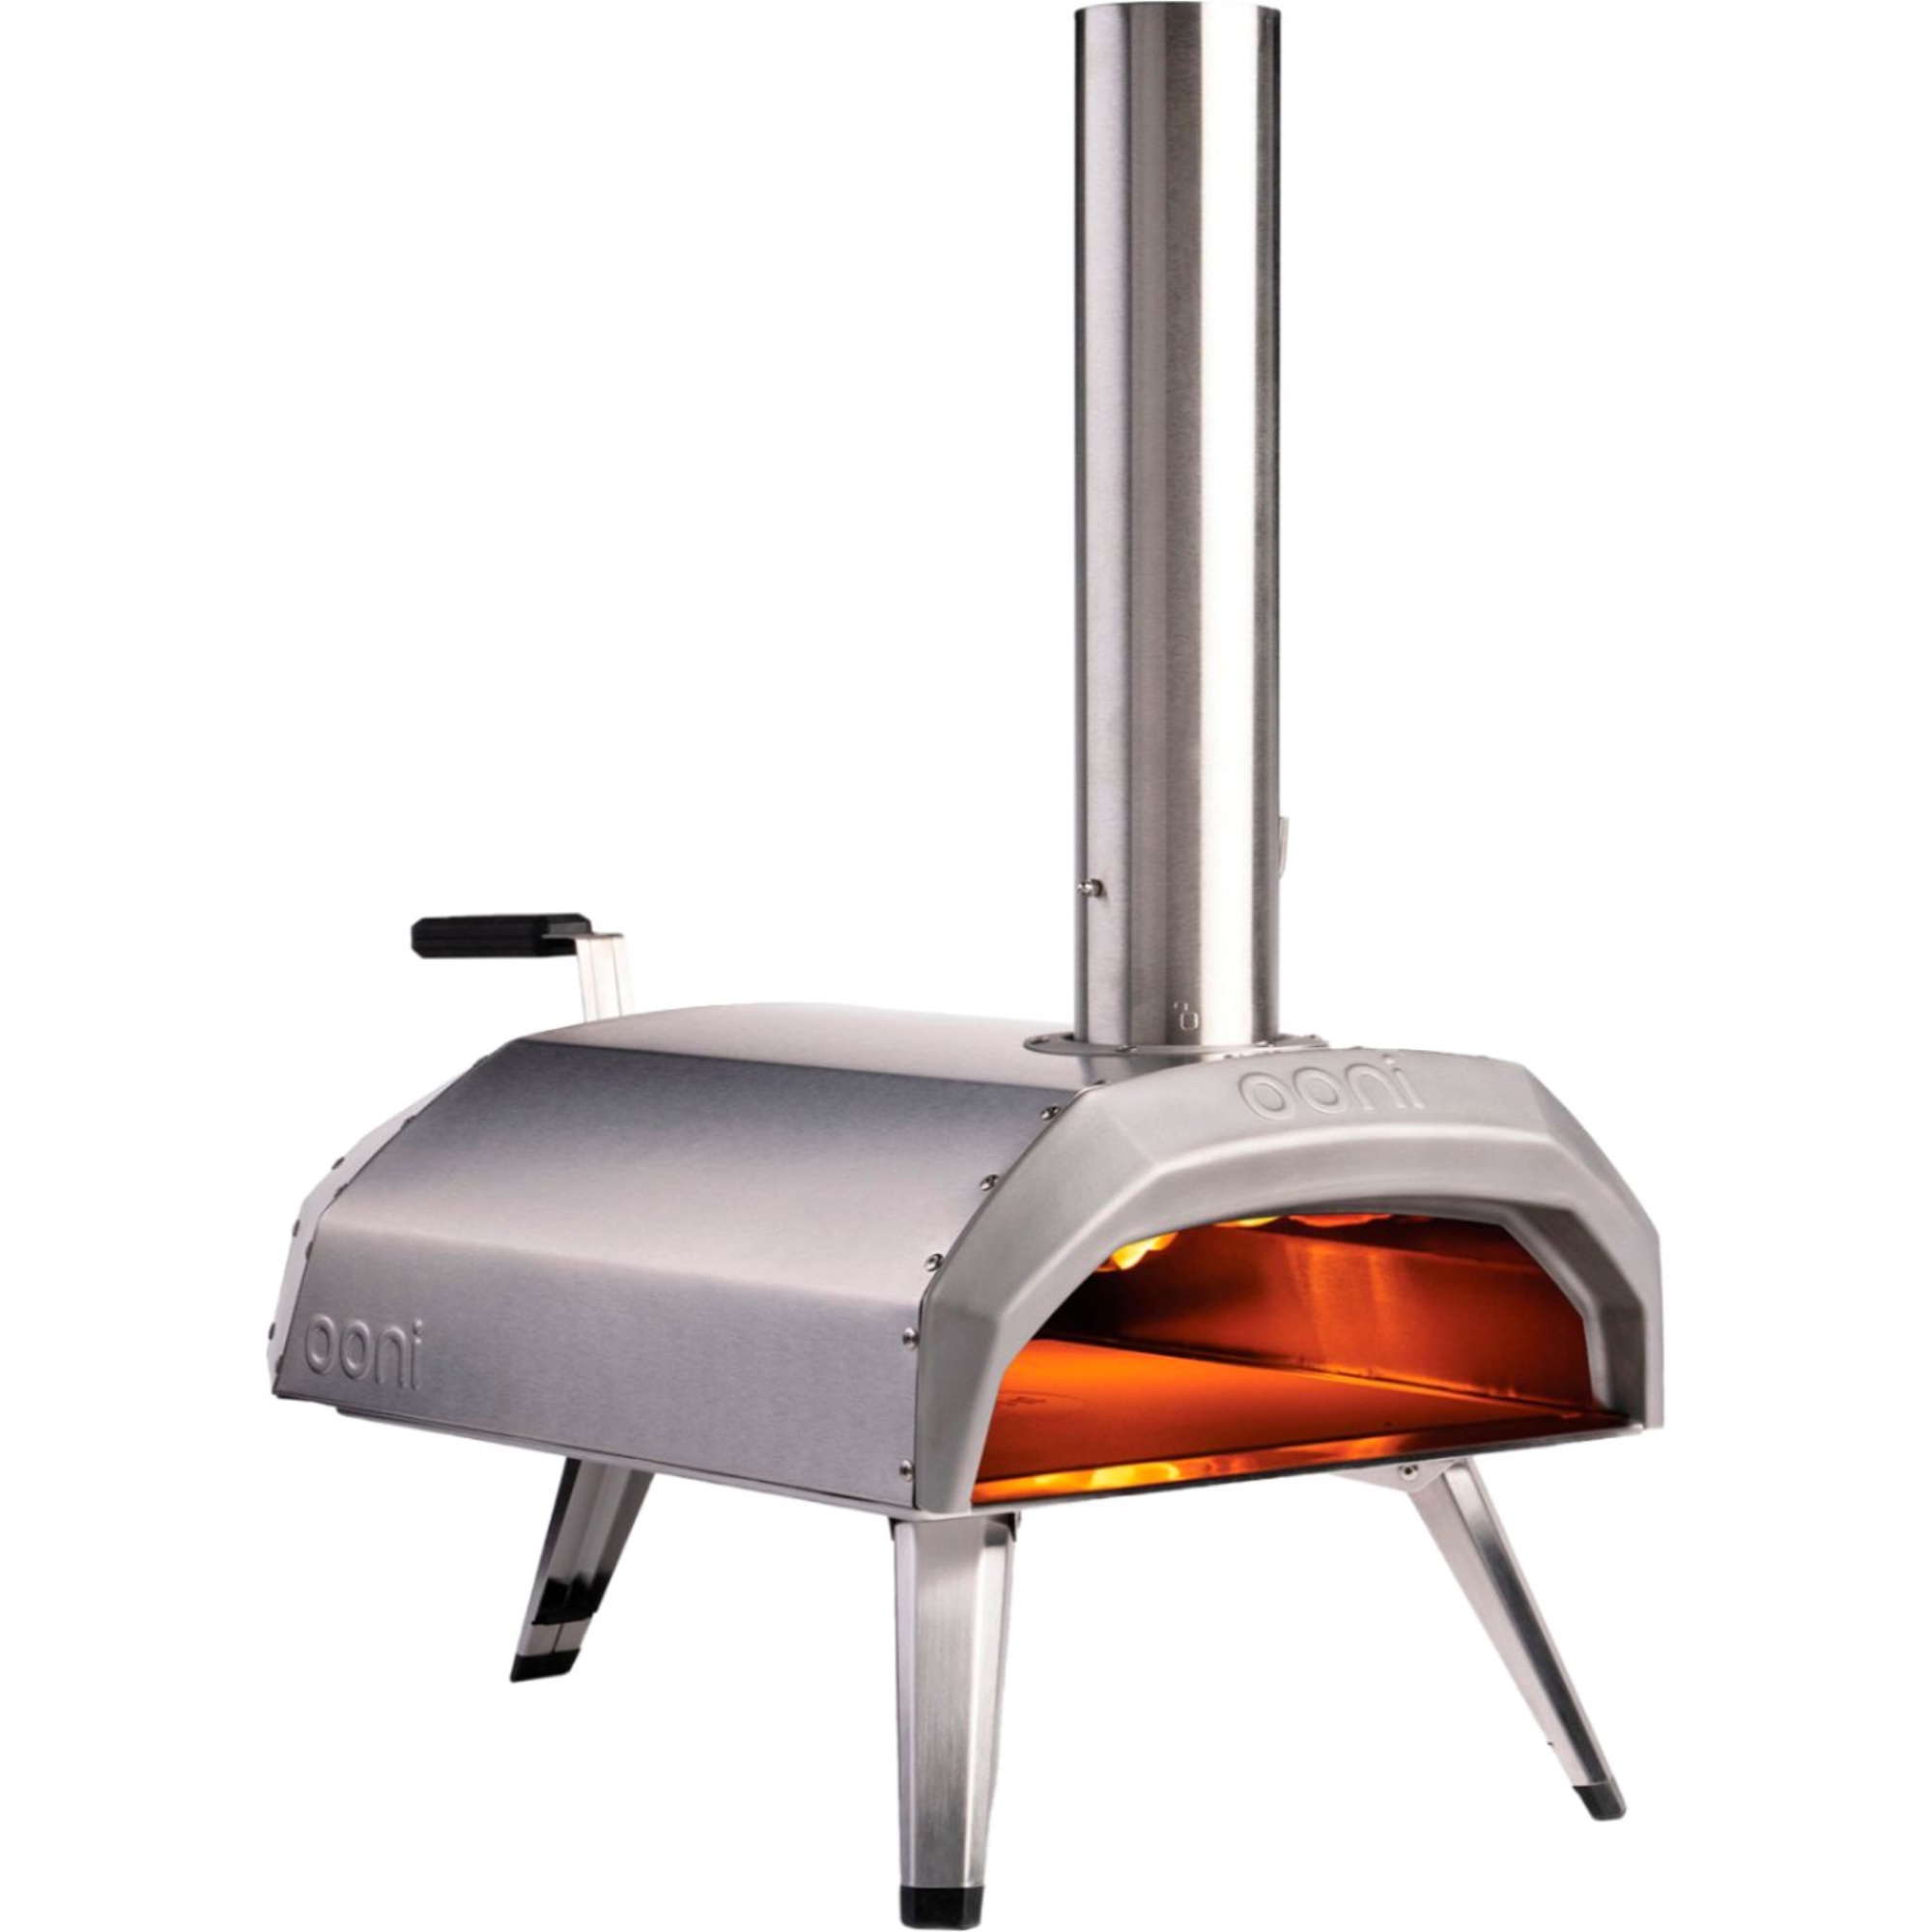 Ooni Karu 12 Multi-Fuel Portable Pizza Oven (#UU-P0A100) - image 1 of 12